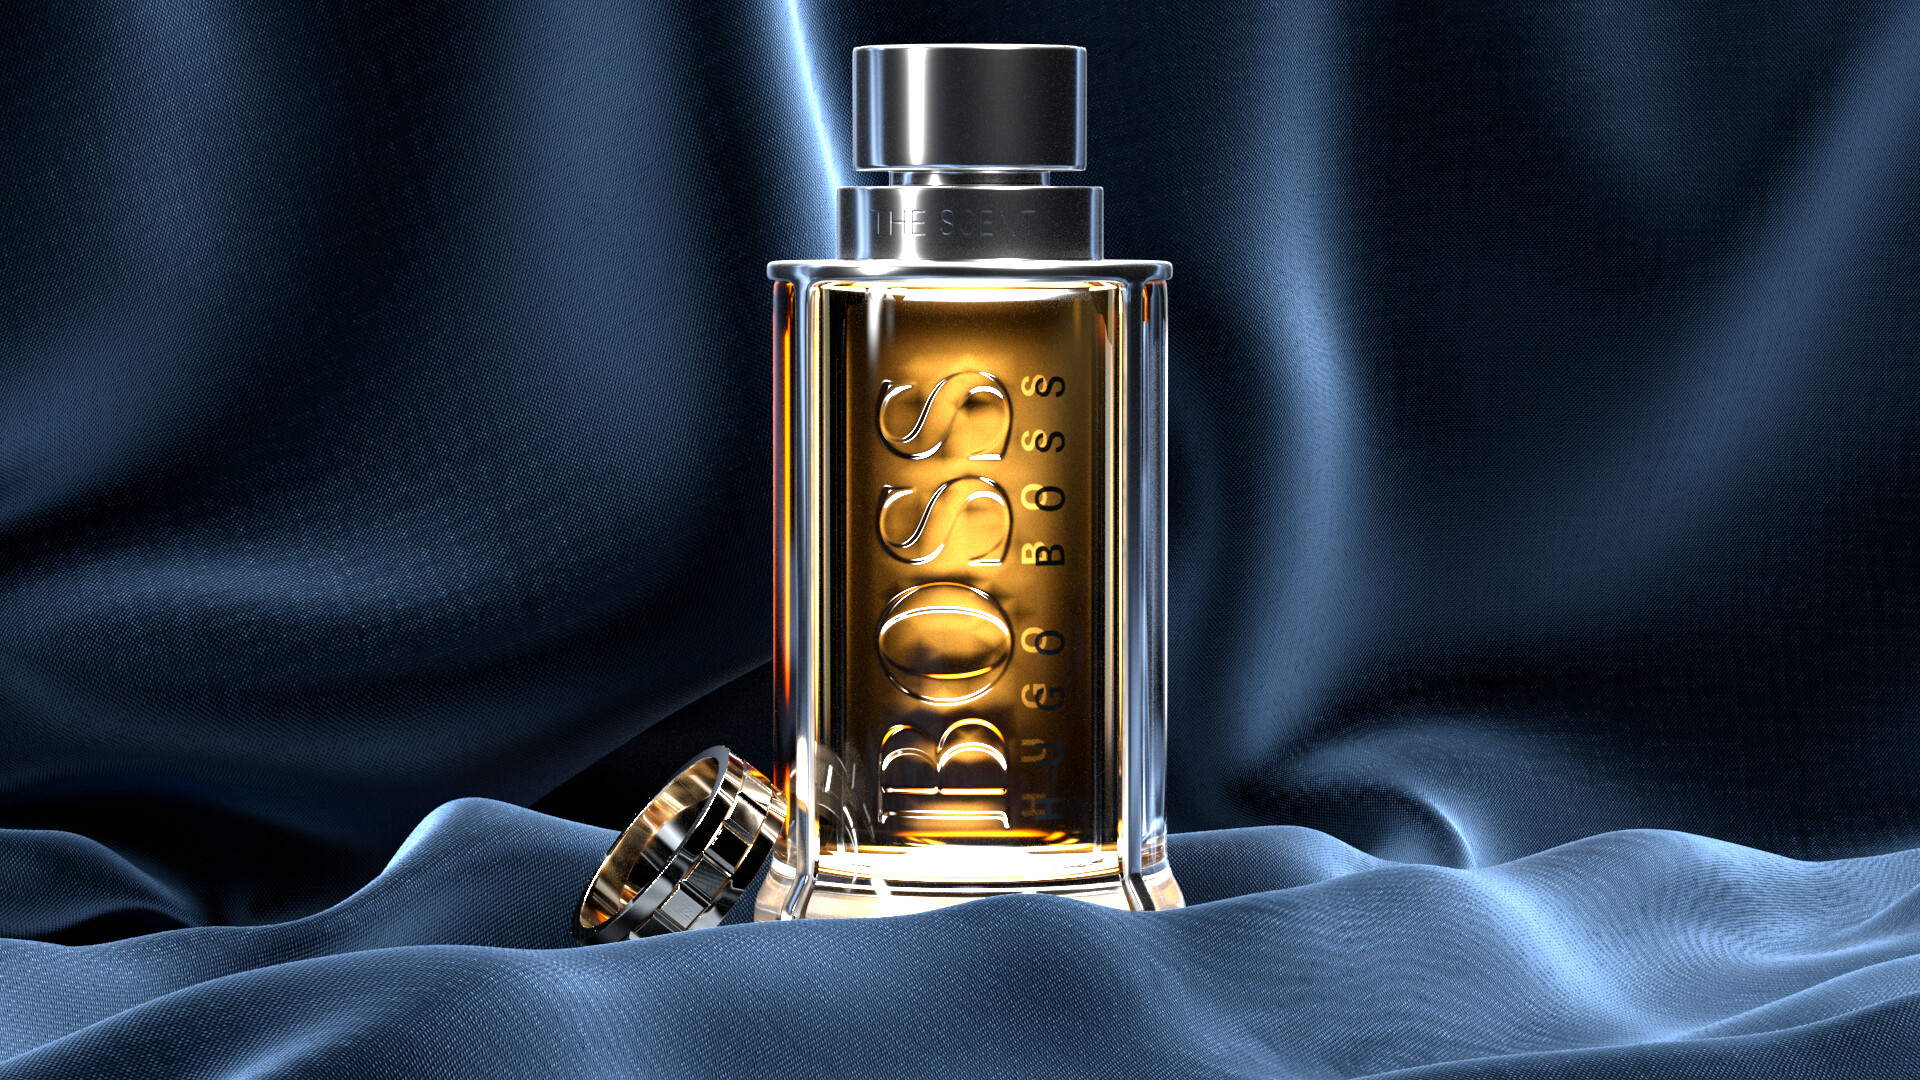 ArtStation - Bleu de Chanel - Perfume packshot reproduction